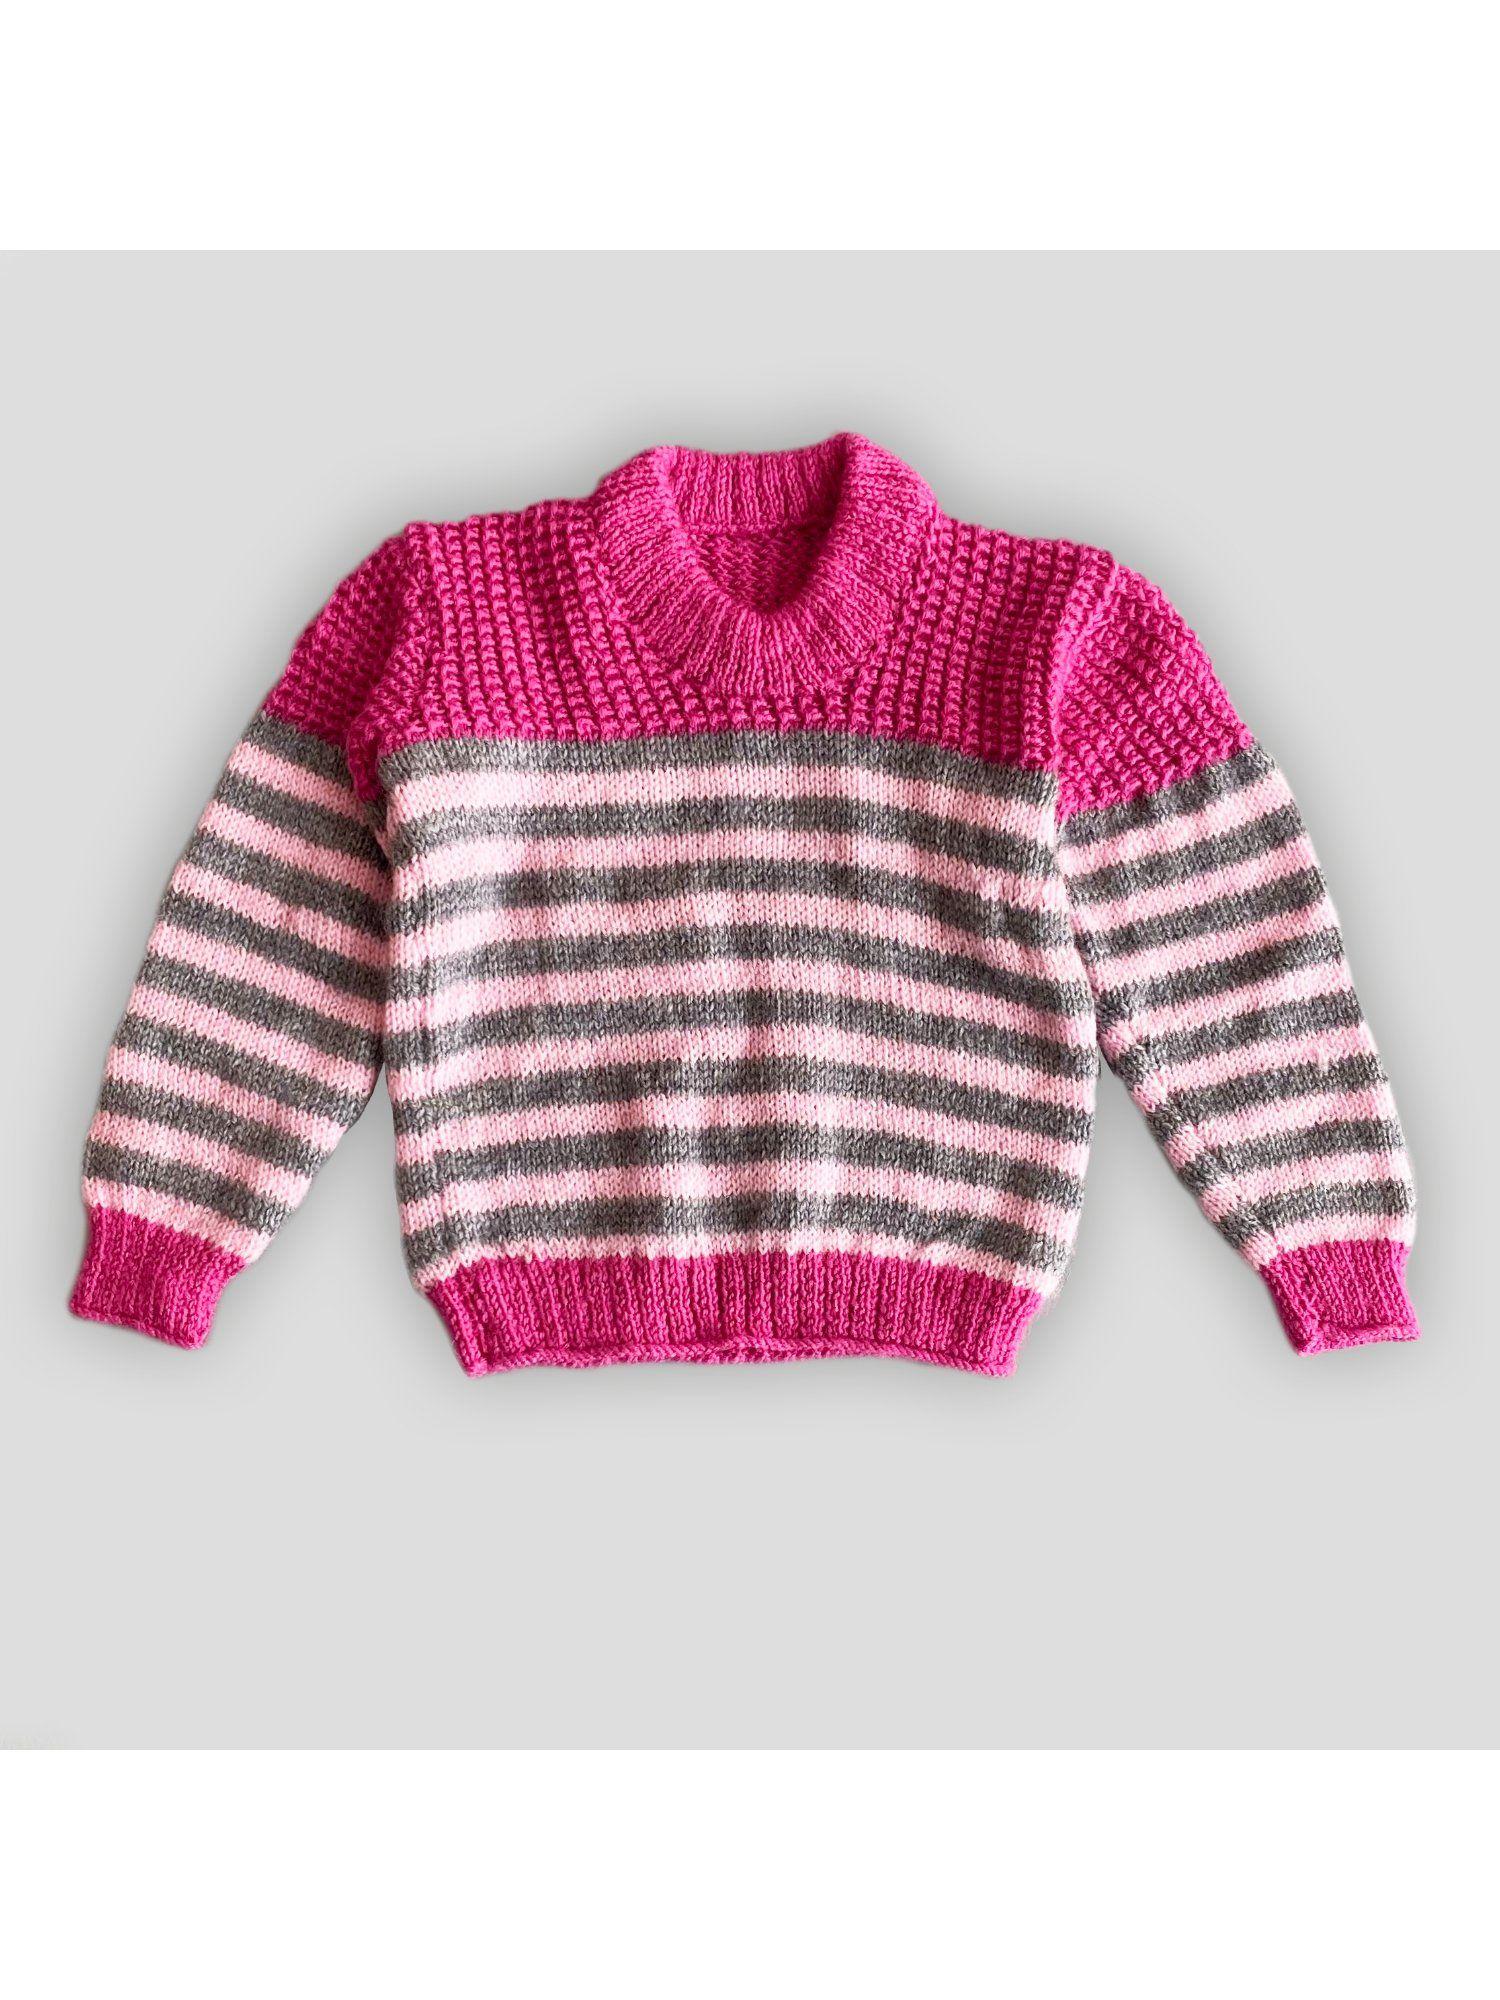 handmade full sleeves sweater - pink